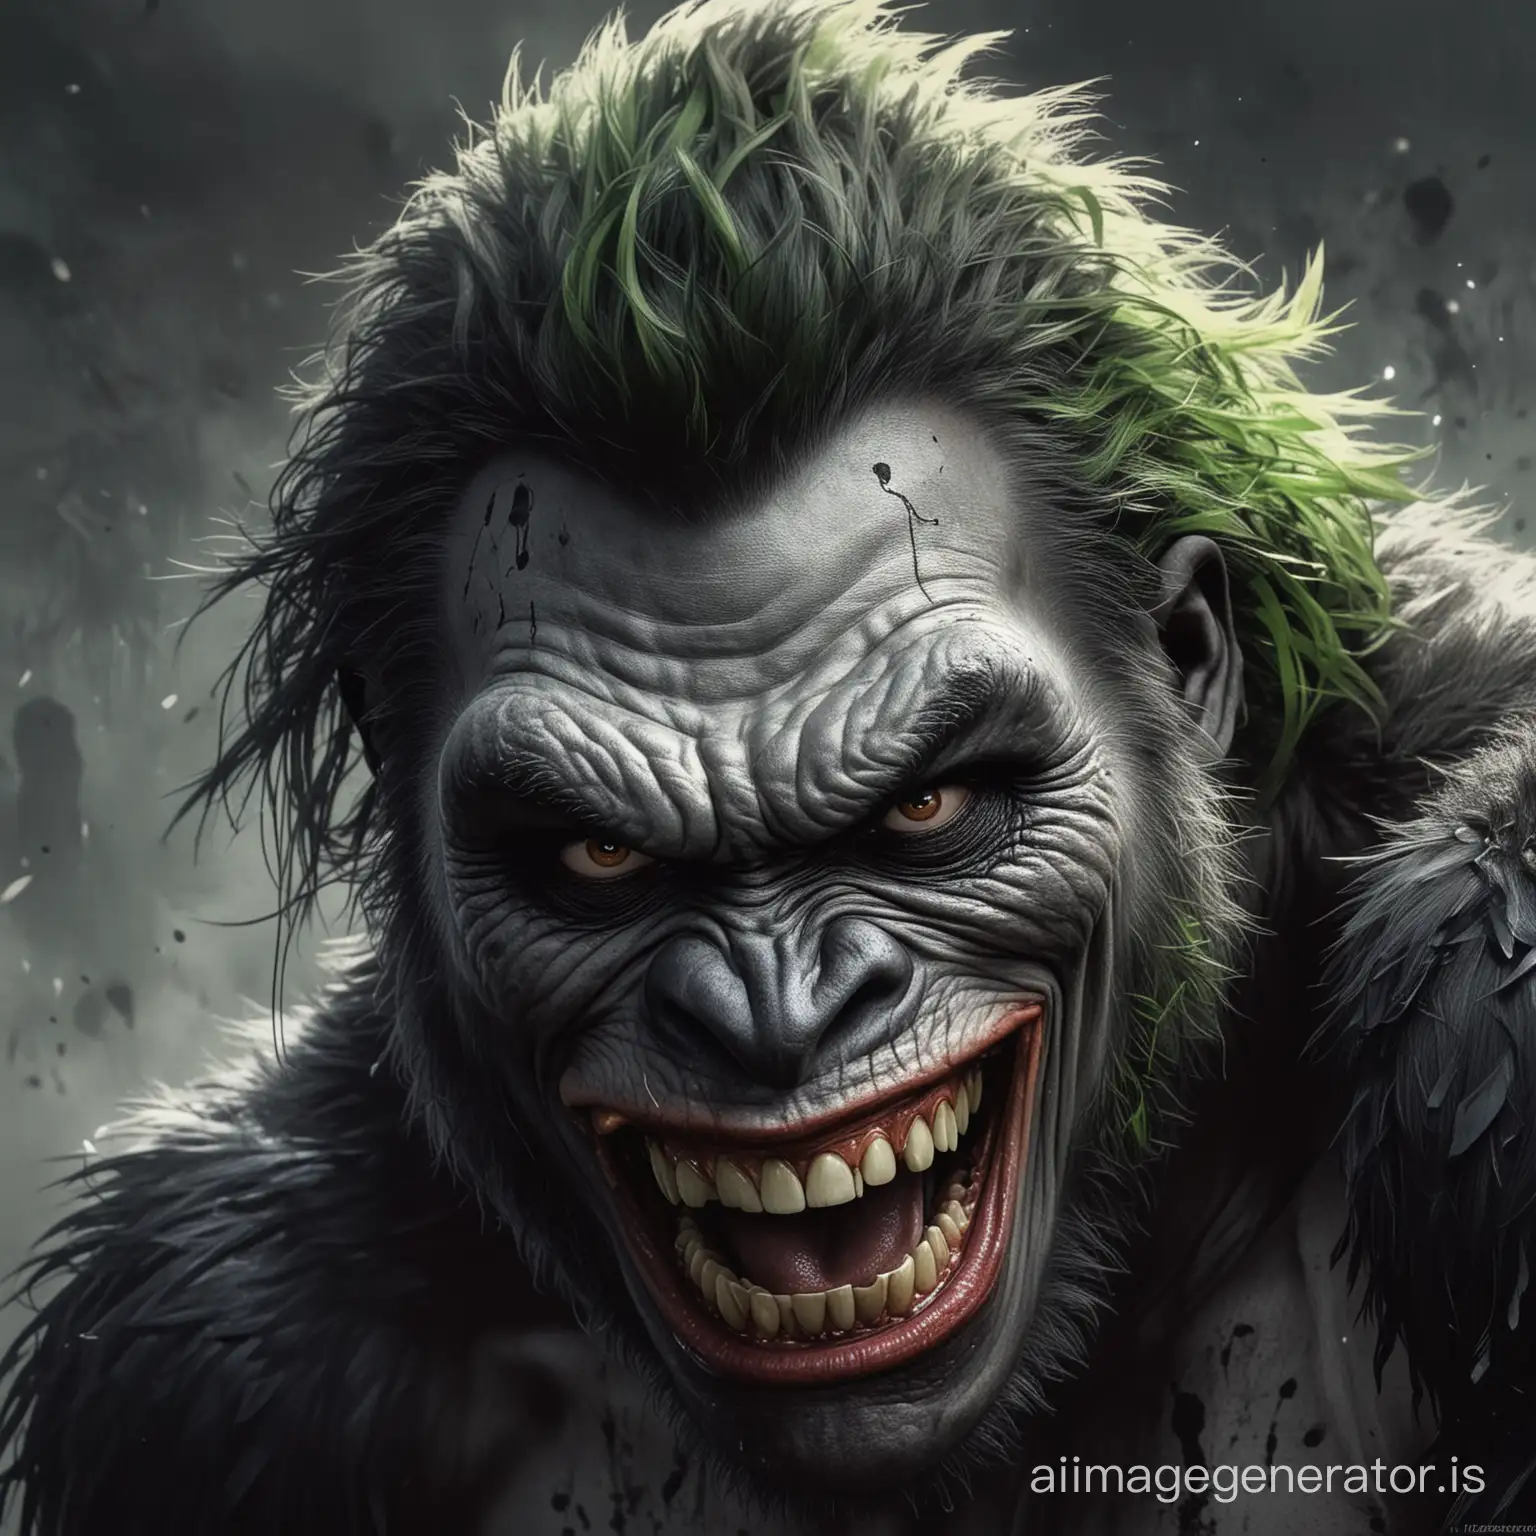 Gorilla joker insane crazy 